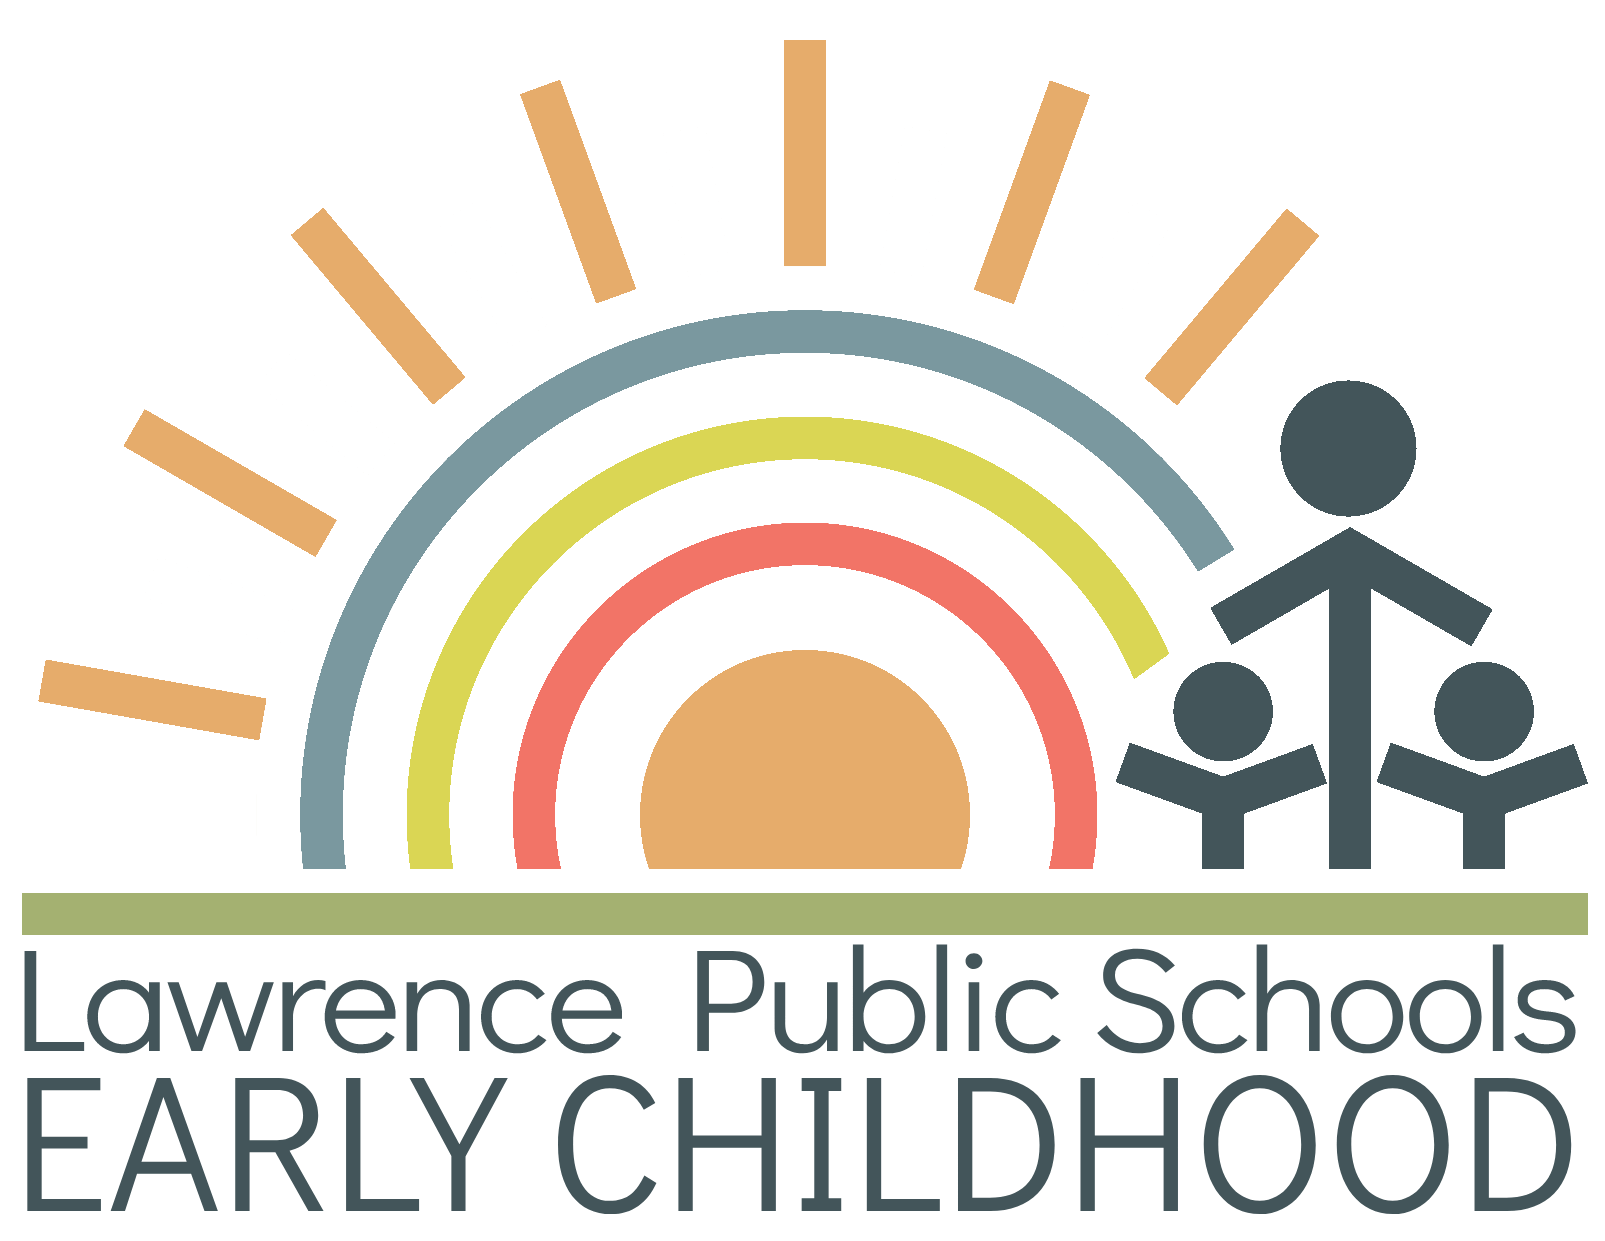 Lawrence Public School Early Childhood logo rainbow and sunrise